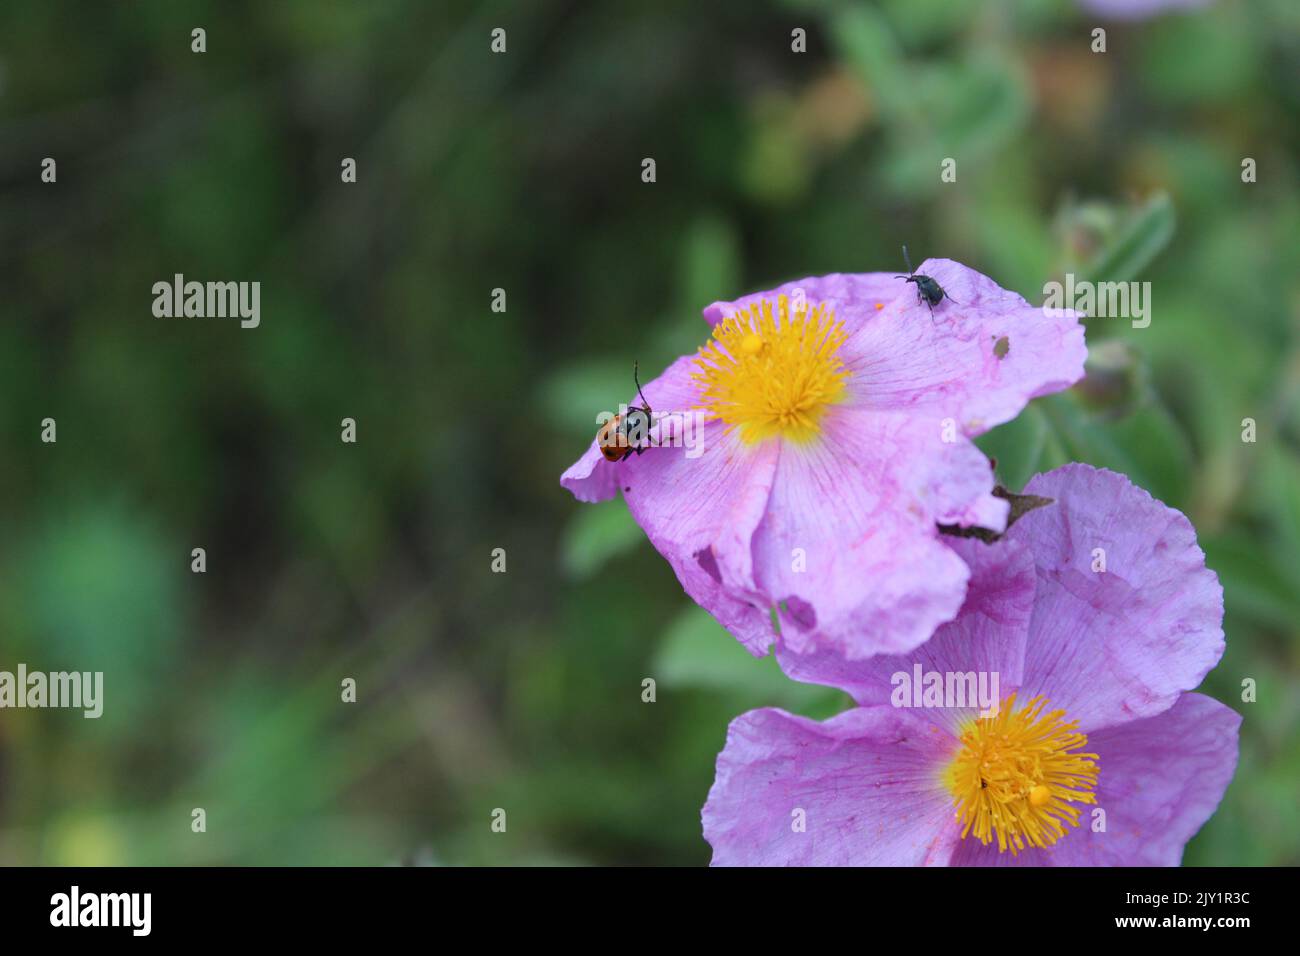 Ladybug on A Purple Flower Photograph Stock Photo